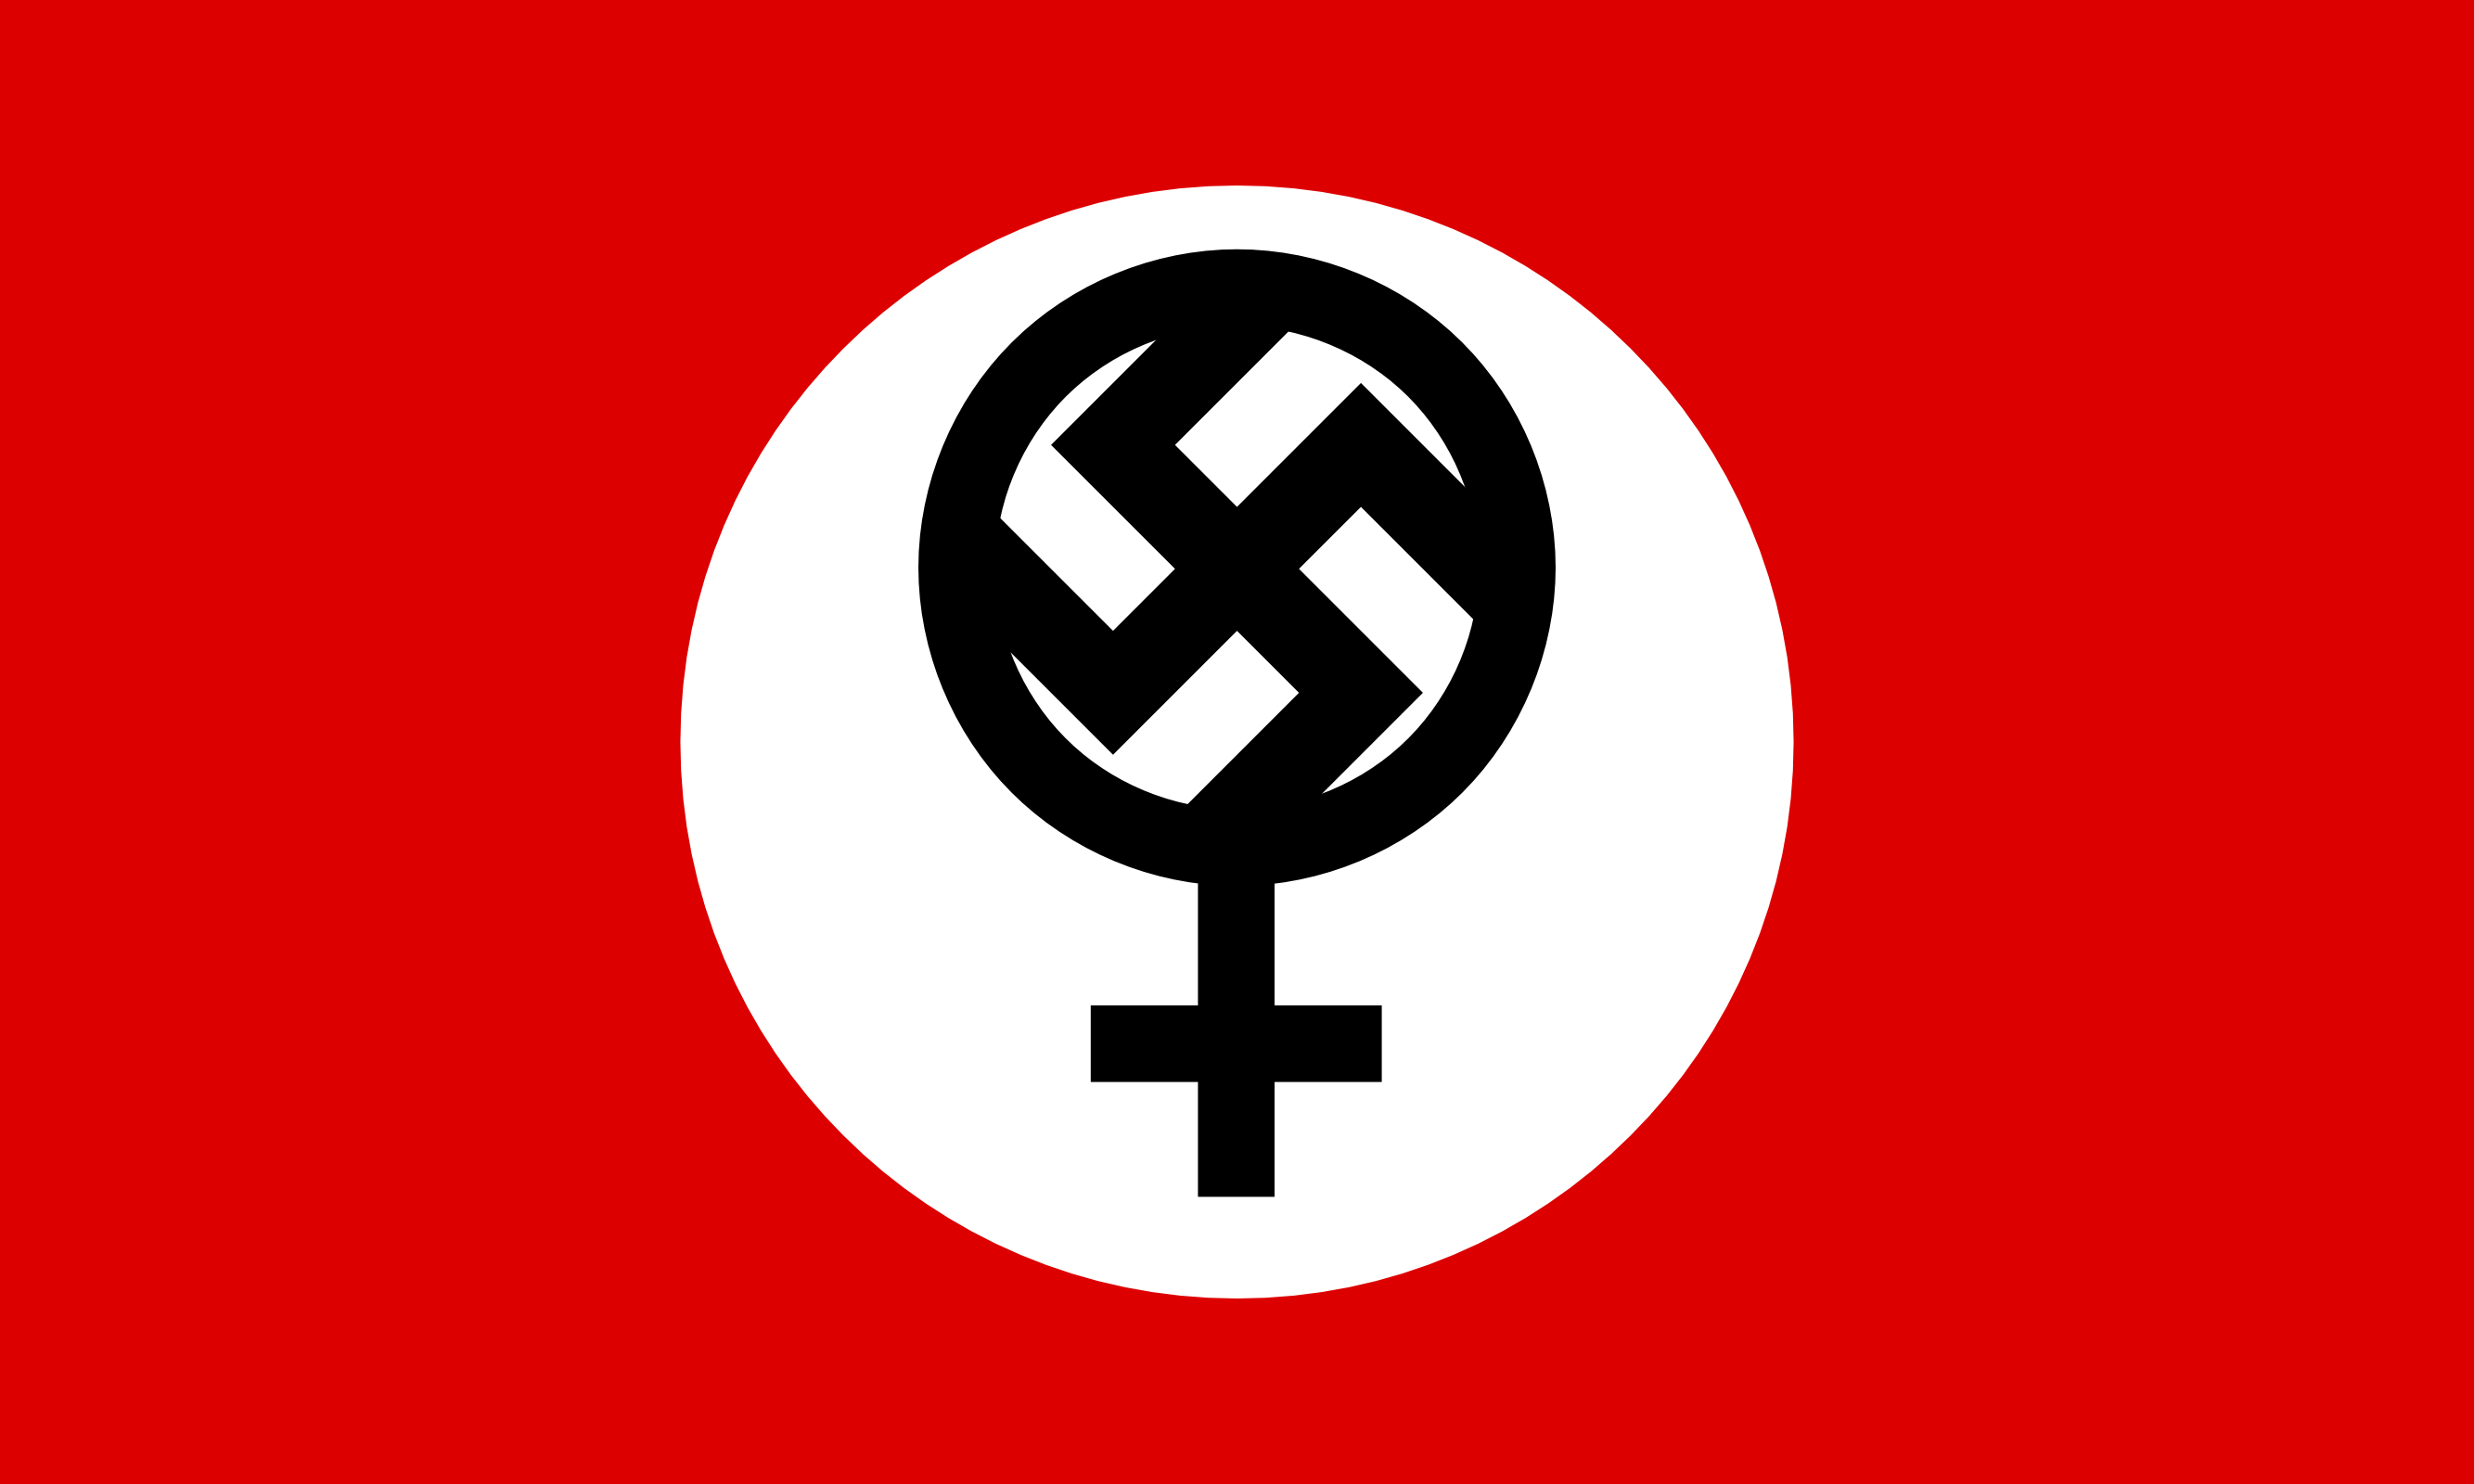 1 archive org. Фашистские символы. Нацистский знак. Наци феминизм.